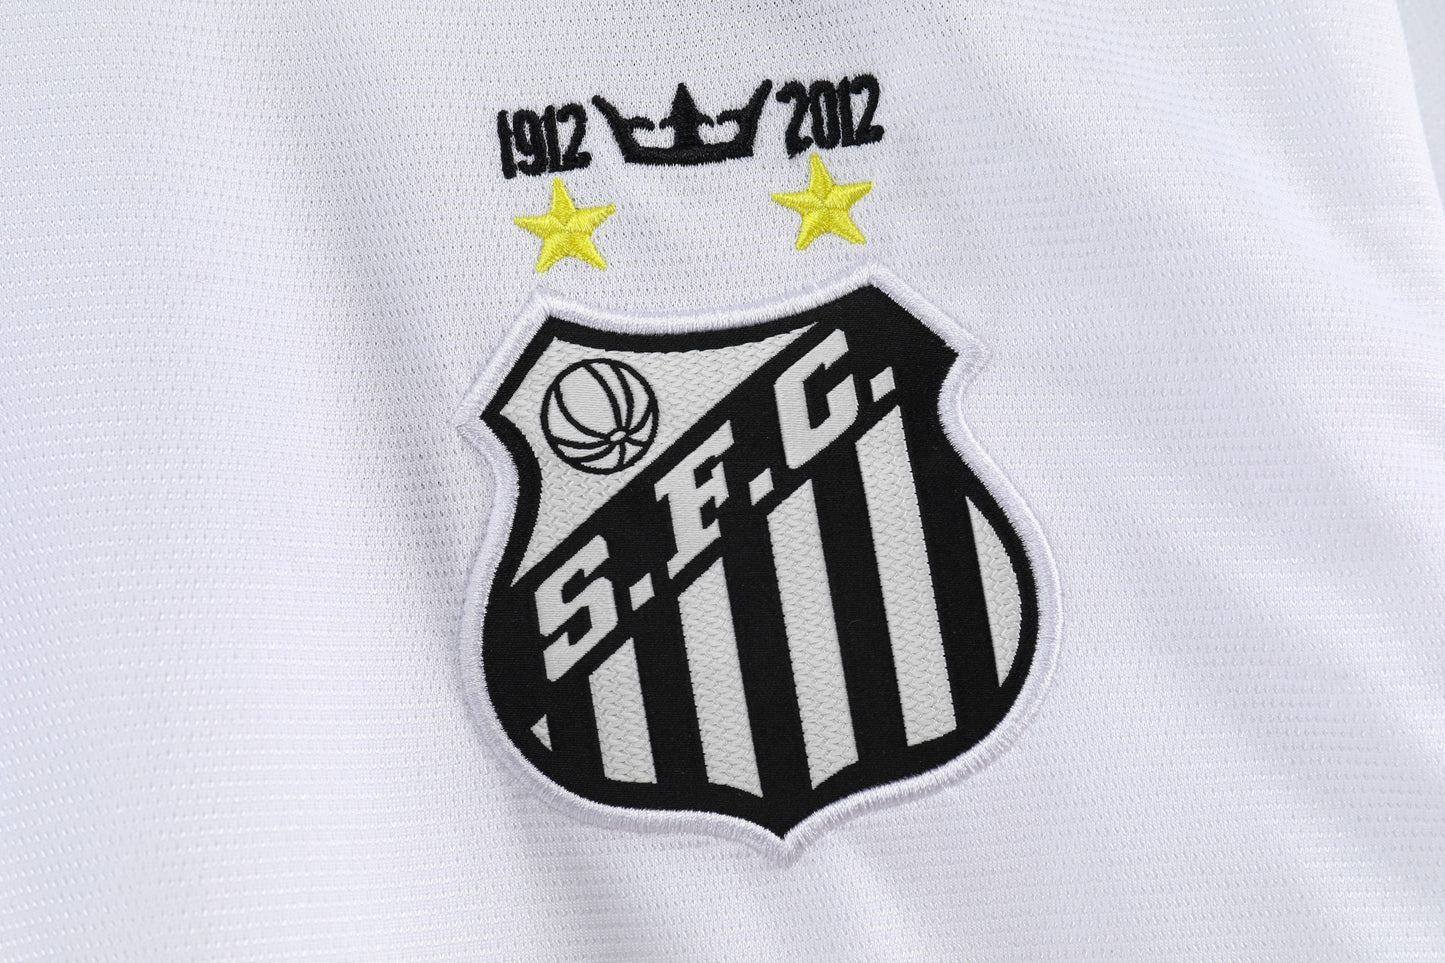 Santos home stadium in 2012/13 season